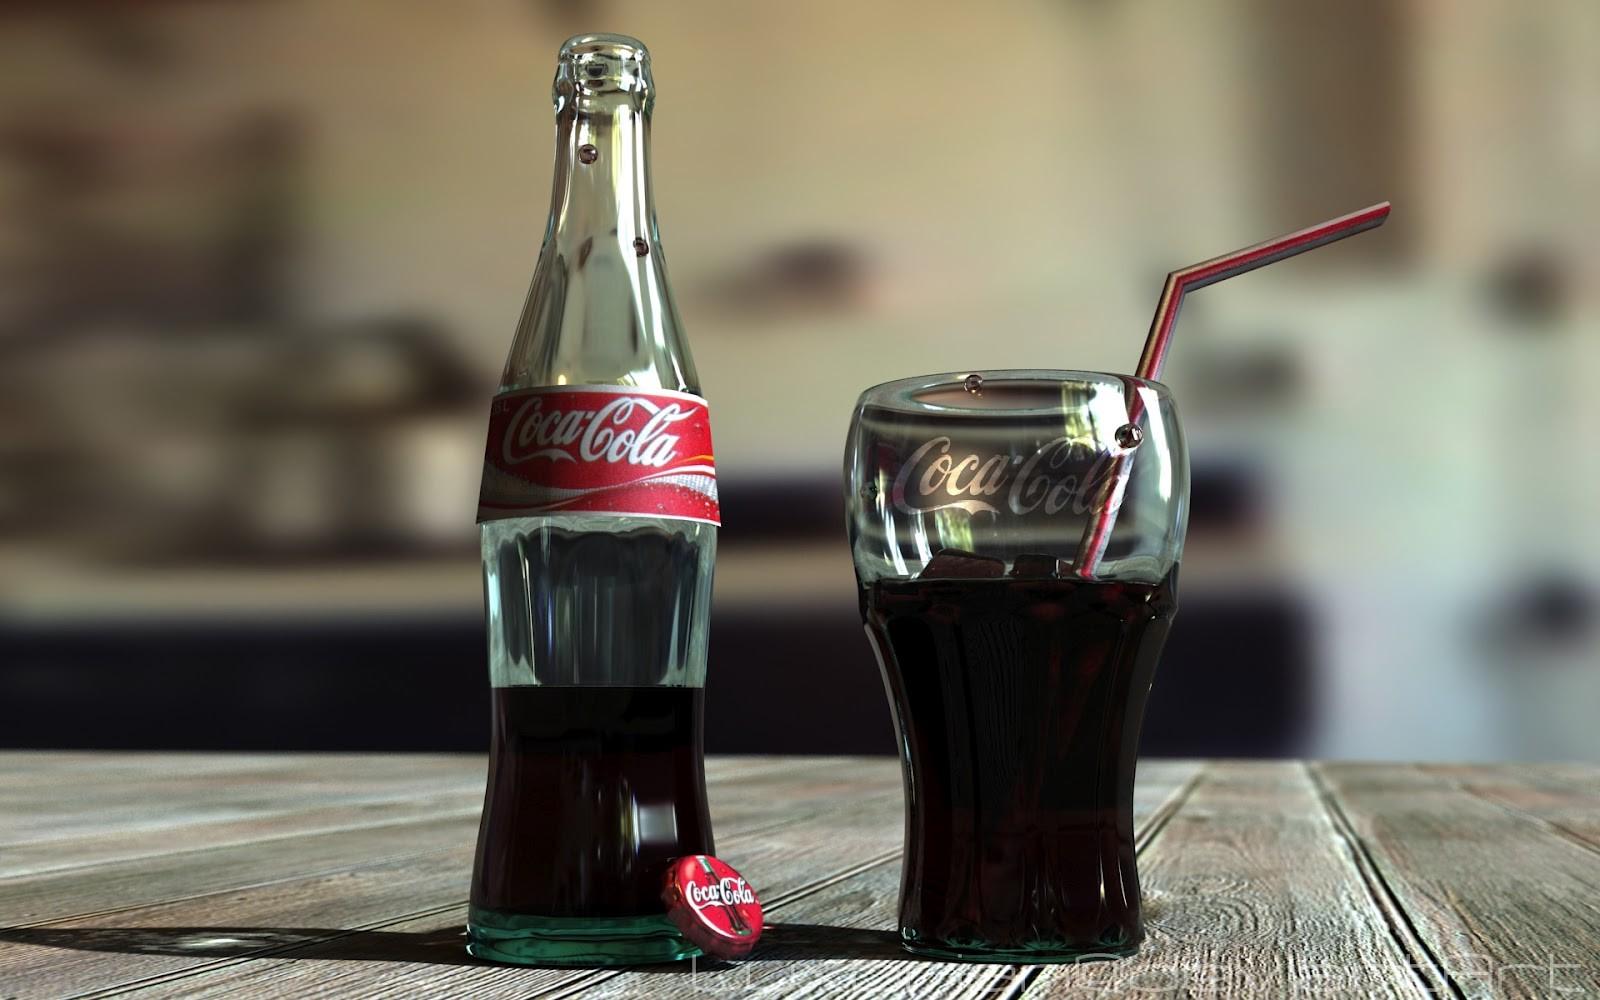 #bottles, #wooden Surface, #Coca Cola, #drink, Wallpaper